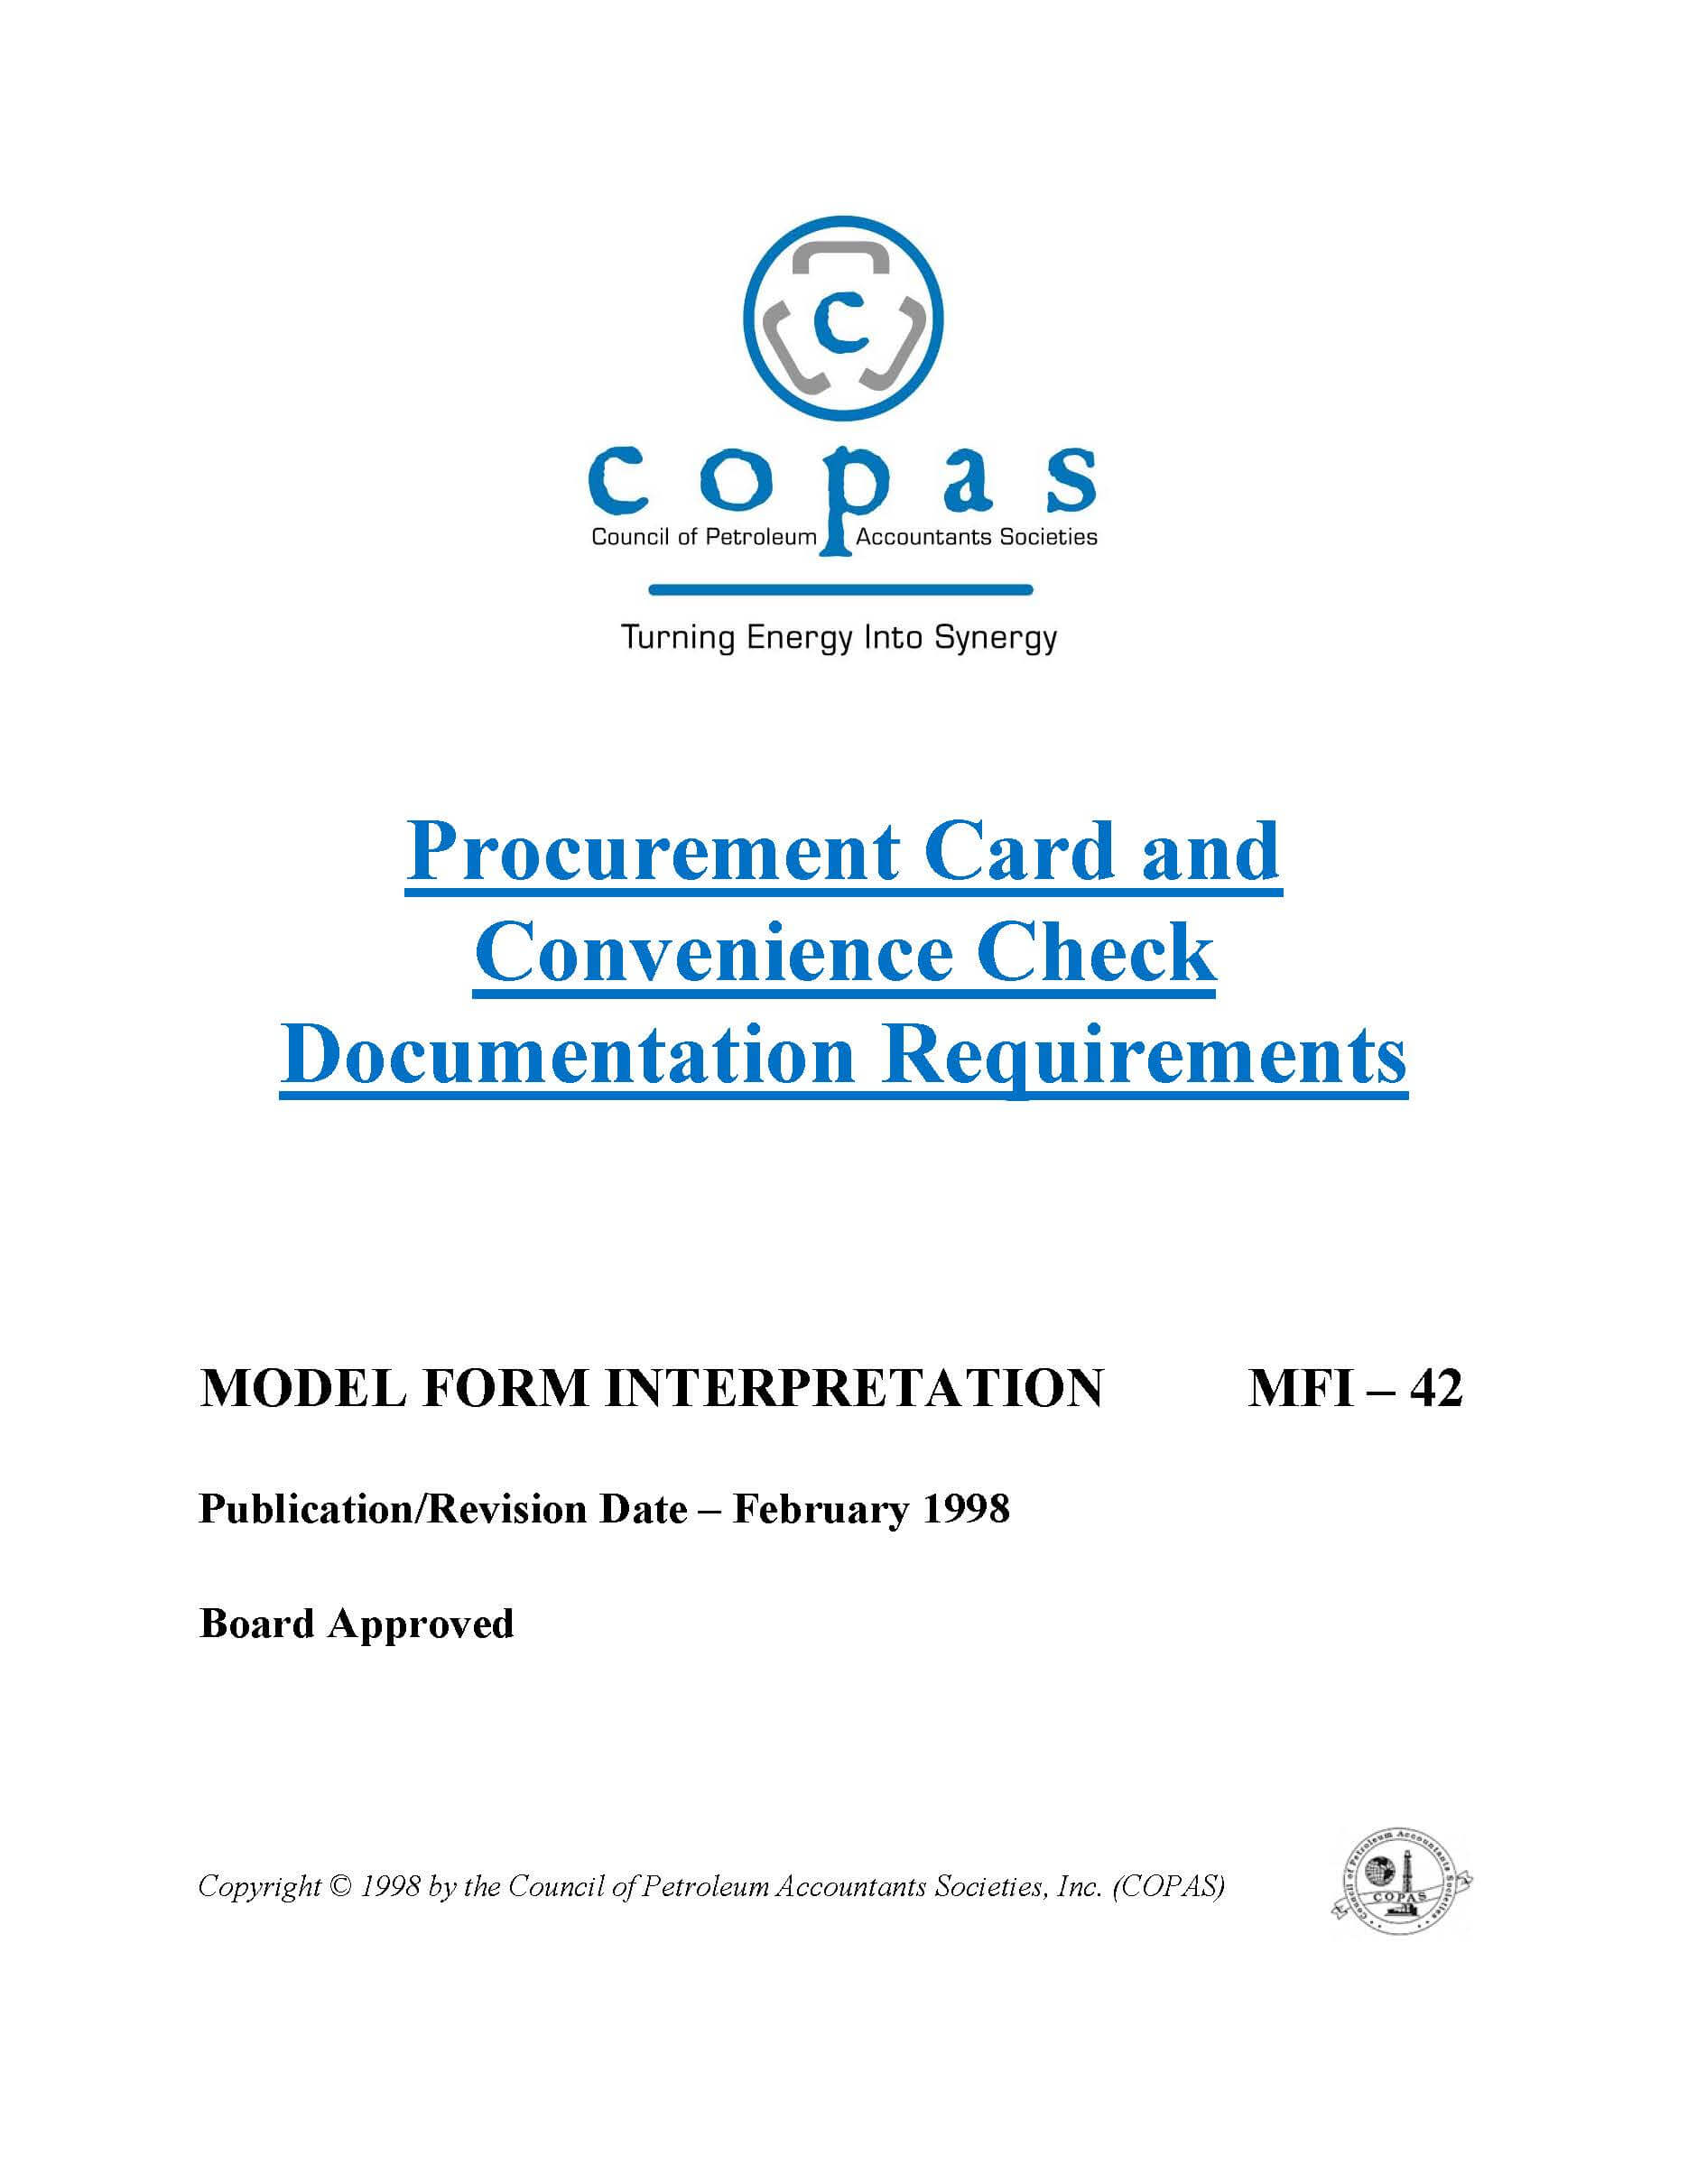 MFI-42 Procurement Card and Convenience Check Documentation Requirements - products MFI 42 Procurement Card Convenience Check Documentation Requirements - Council of Petroleum Accountants Societies